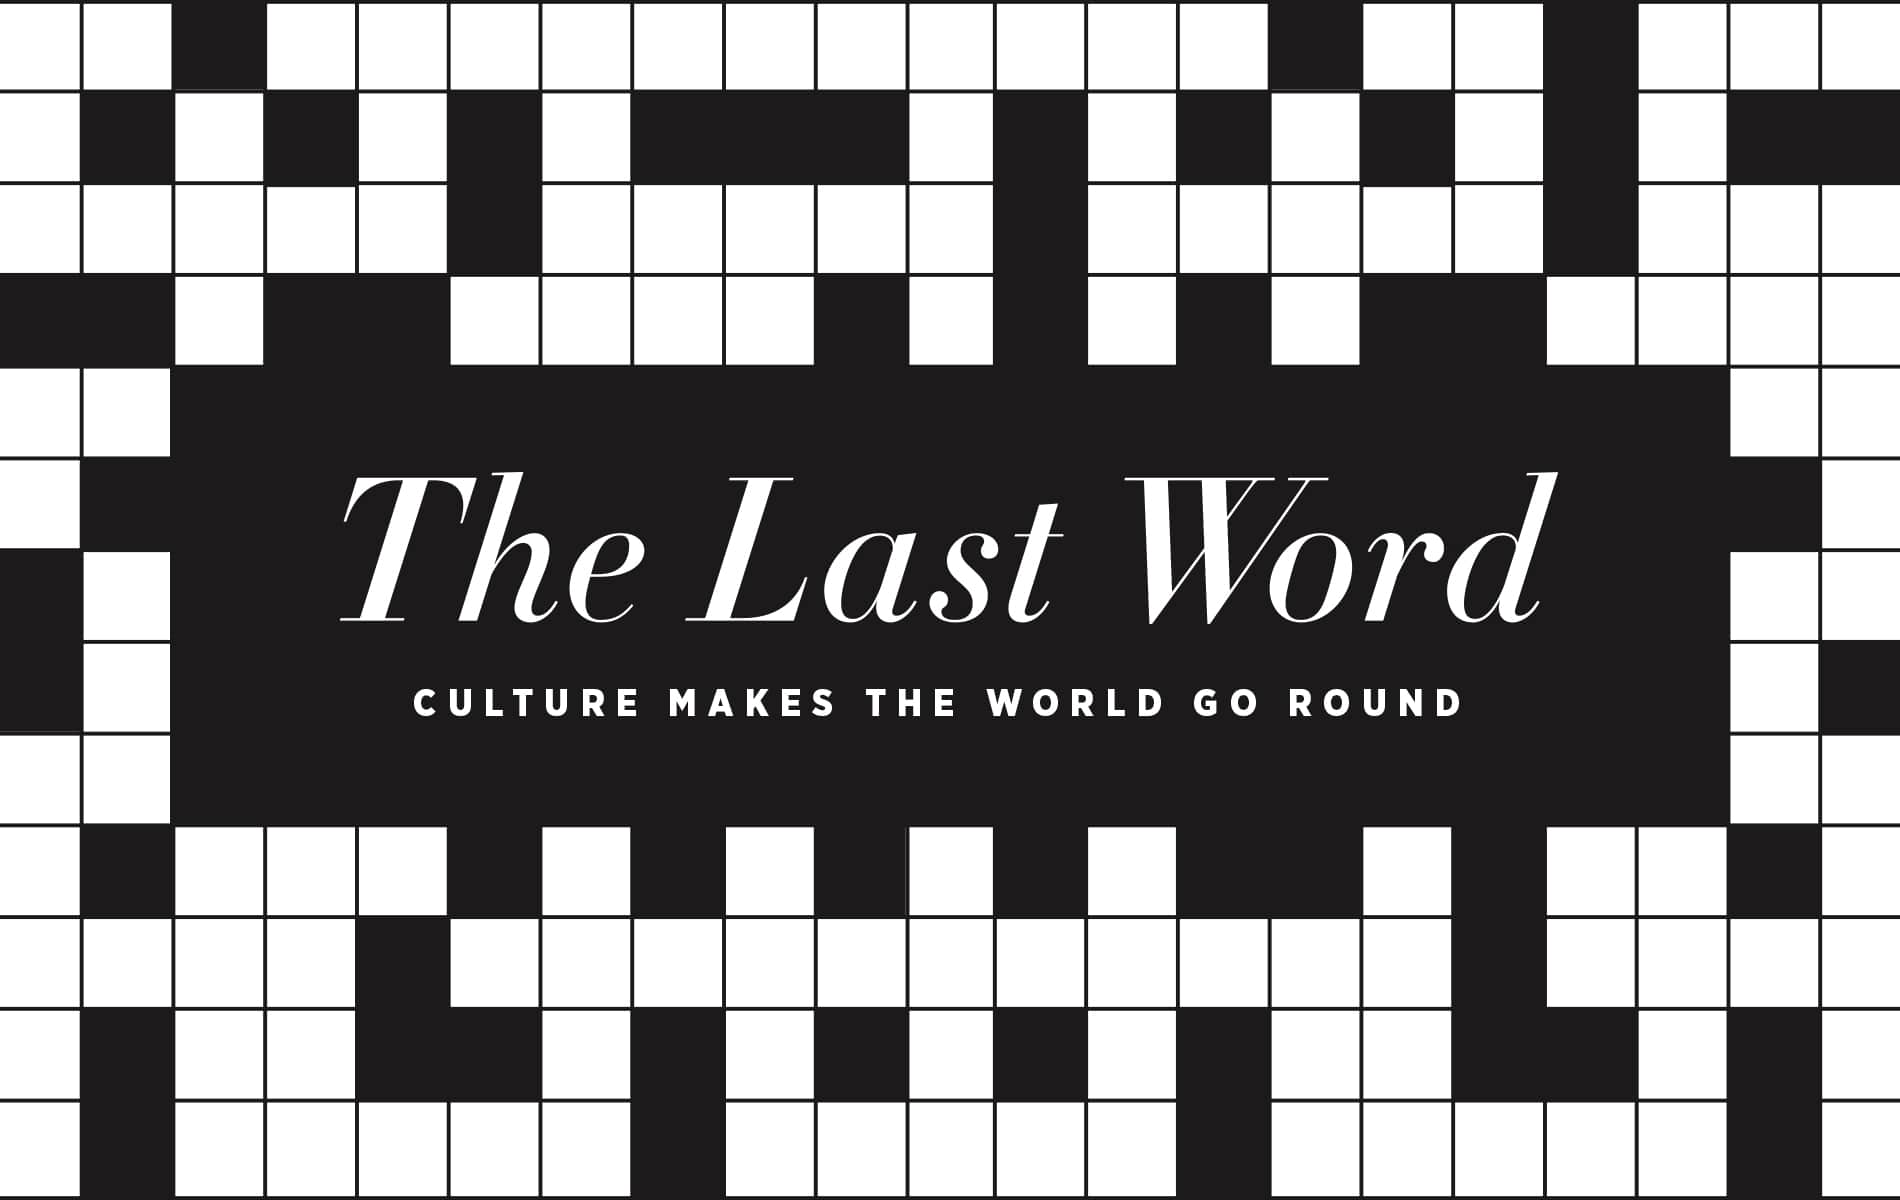 VIE Magazine Crossword Puzzle, The Last Word Culture Makes the World Go Round